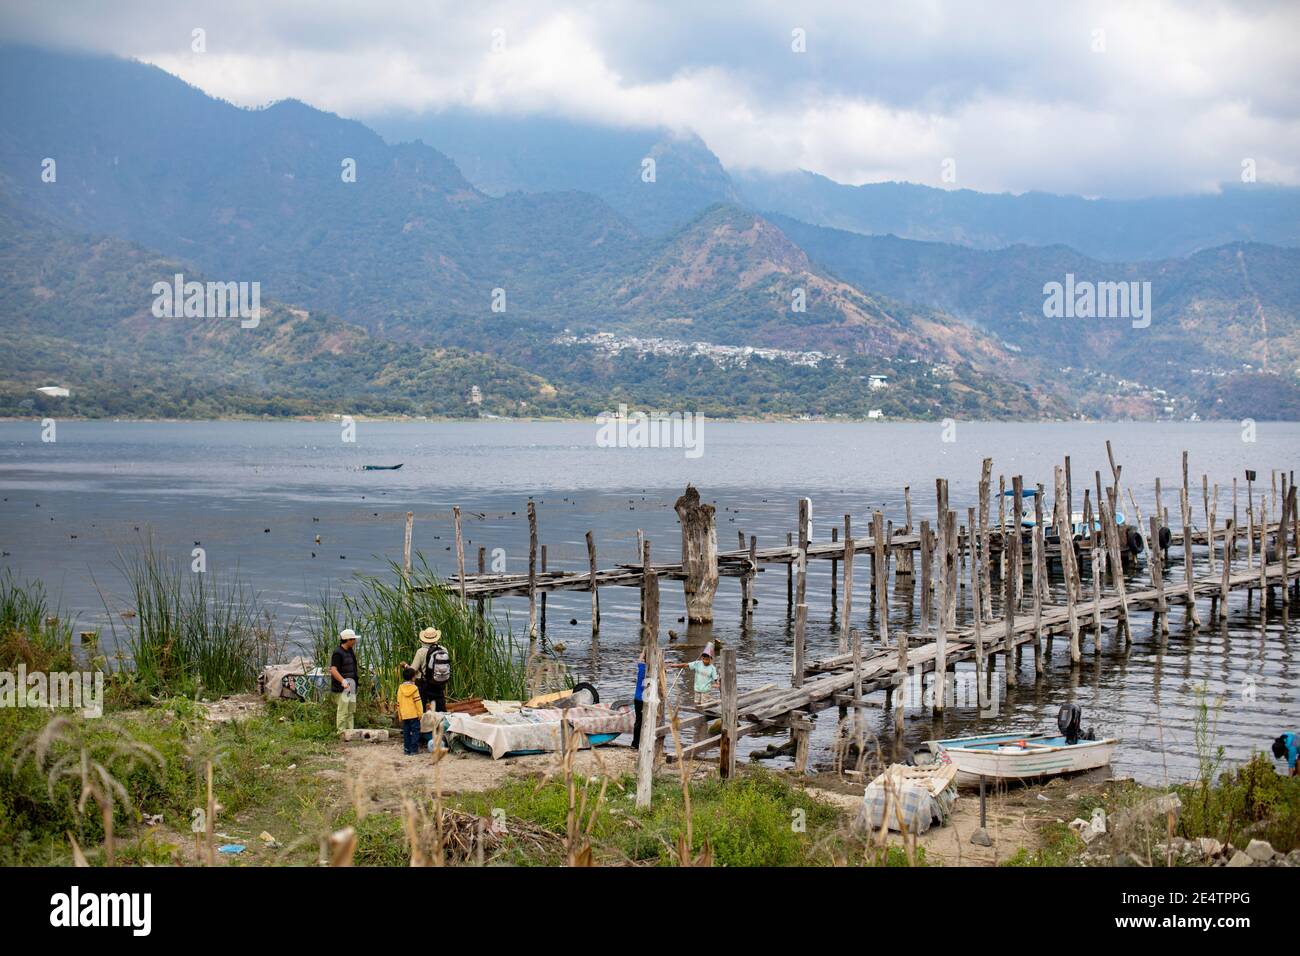 Wunderschöne Landschaft am Atitlán-See, Guatemala, Mittelamerika. Stockfoto